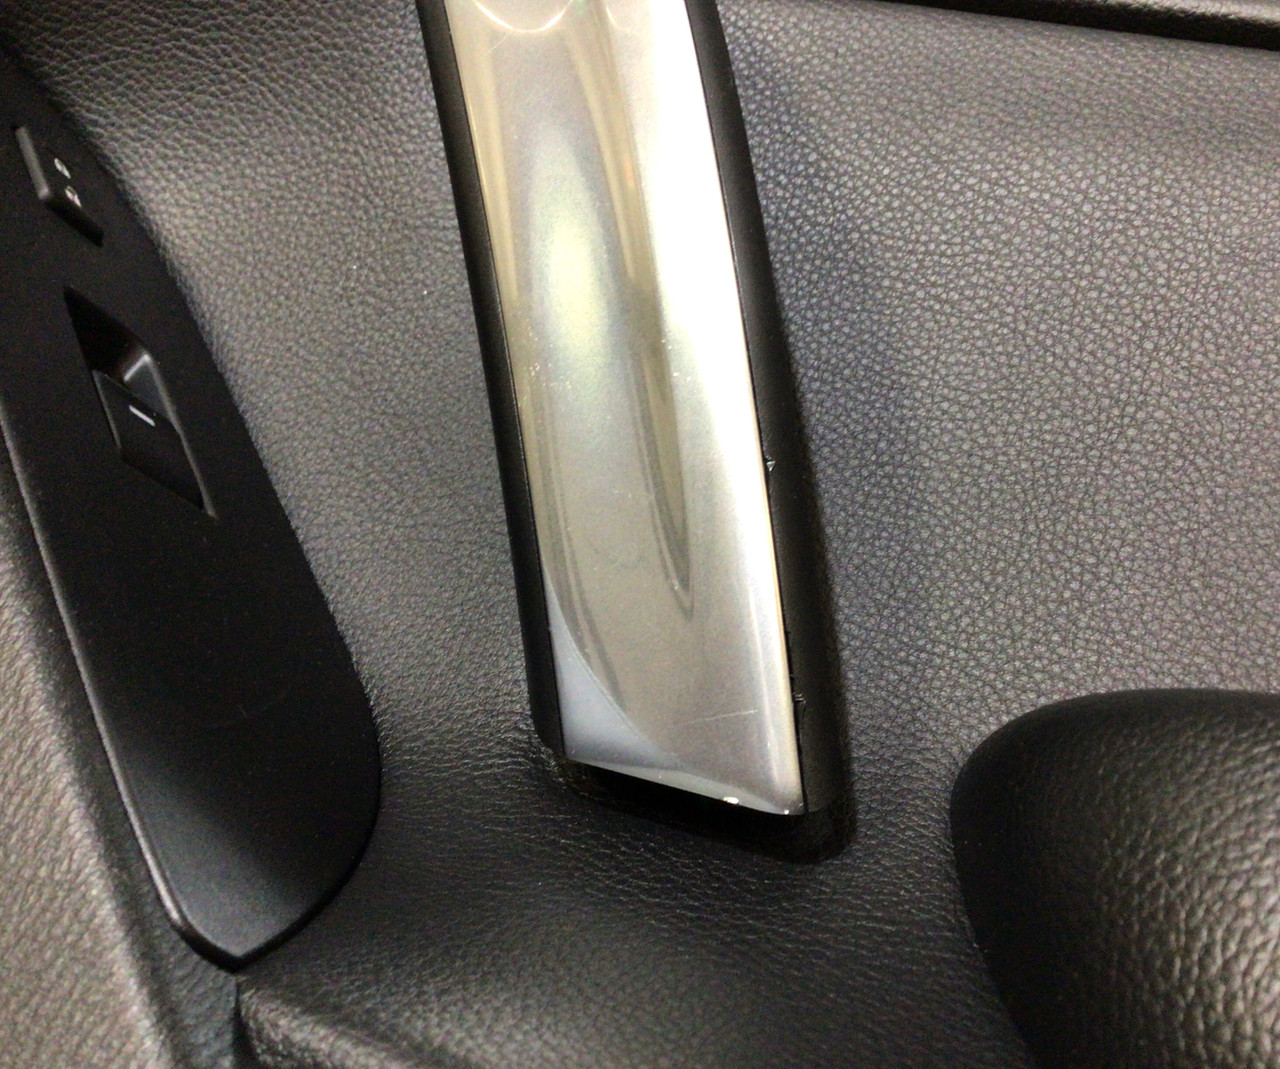 FIAT 124 Door Panel Clip - Fits all